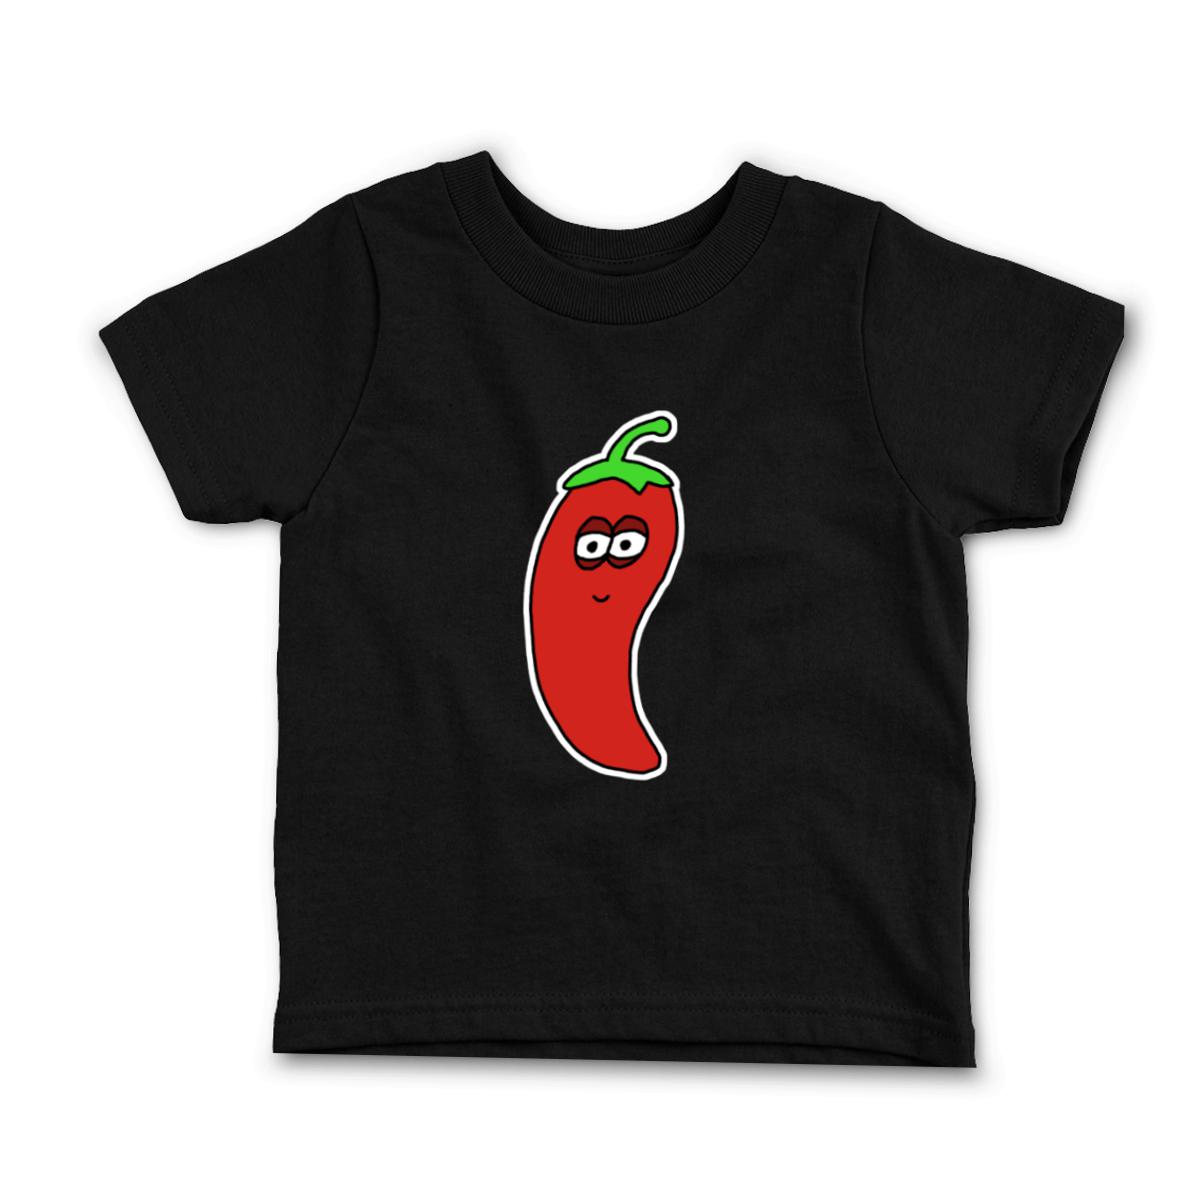 Chili Pepper Infant Tee 12M black